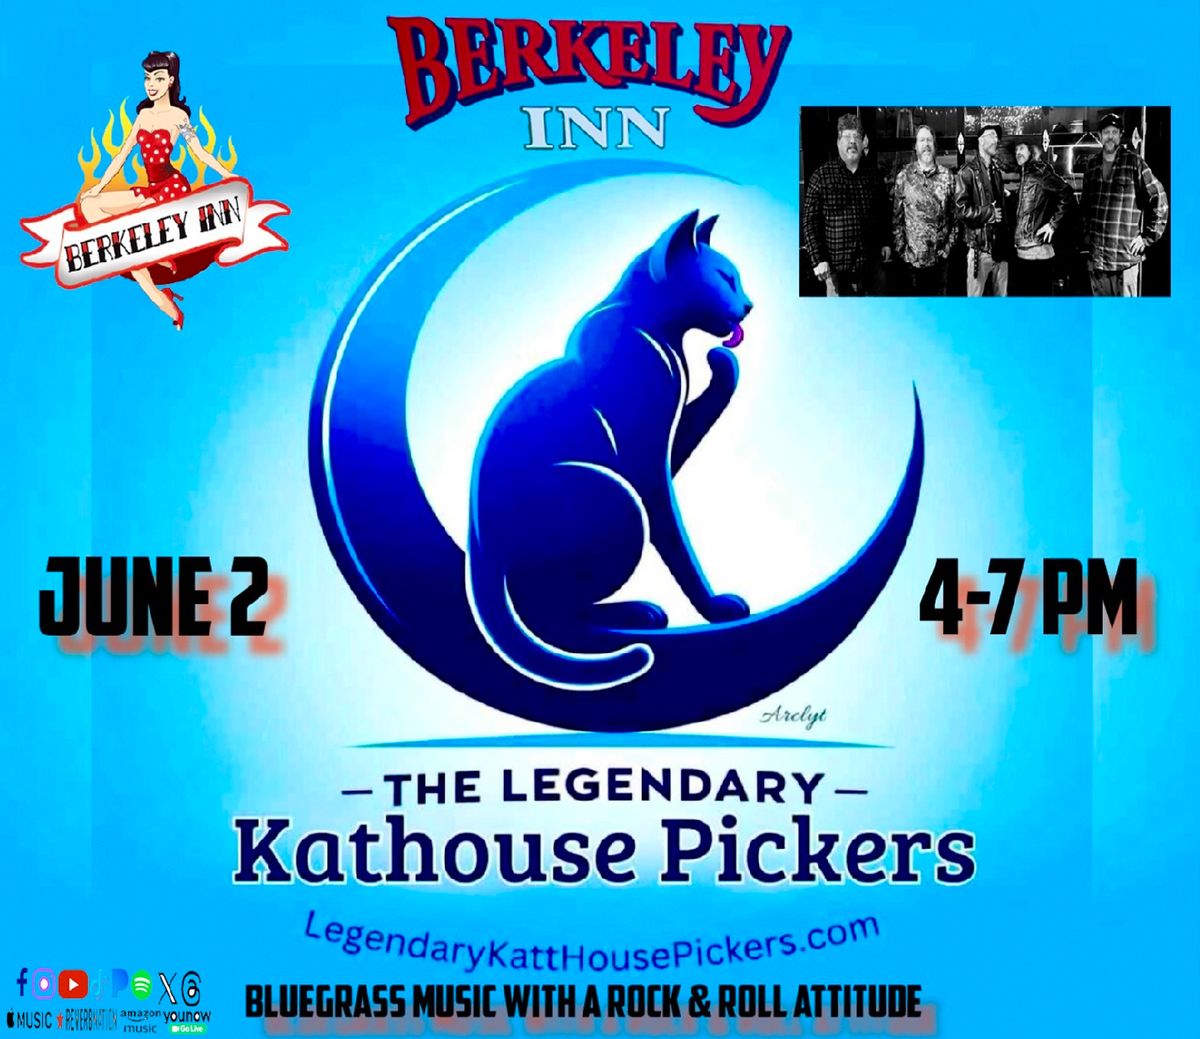 The Legendary Kathouse Pickers @ Berkeley Inn